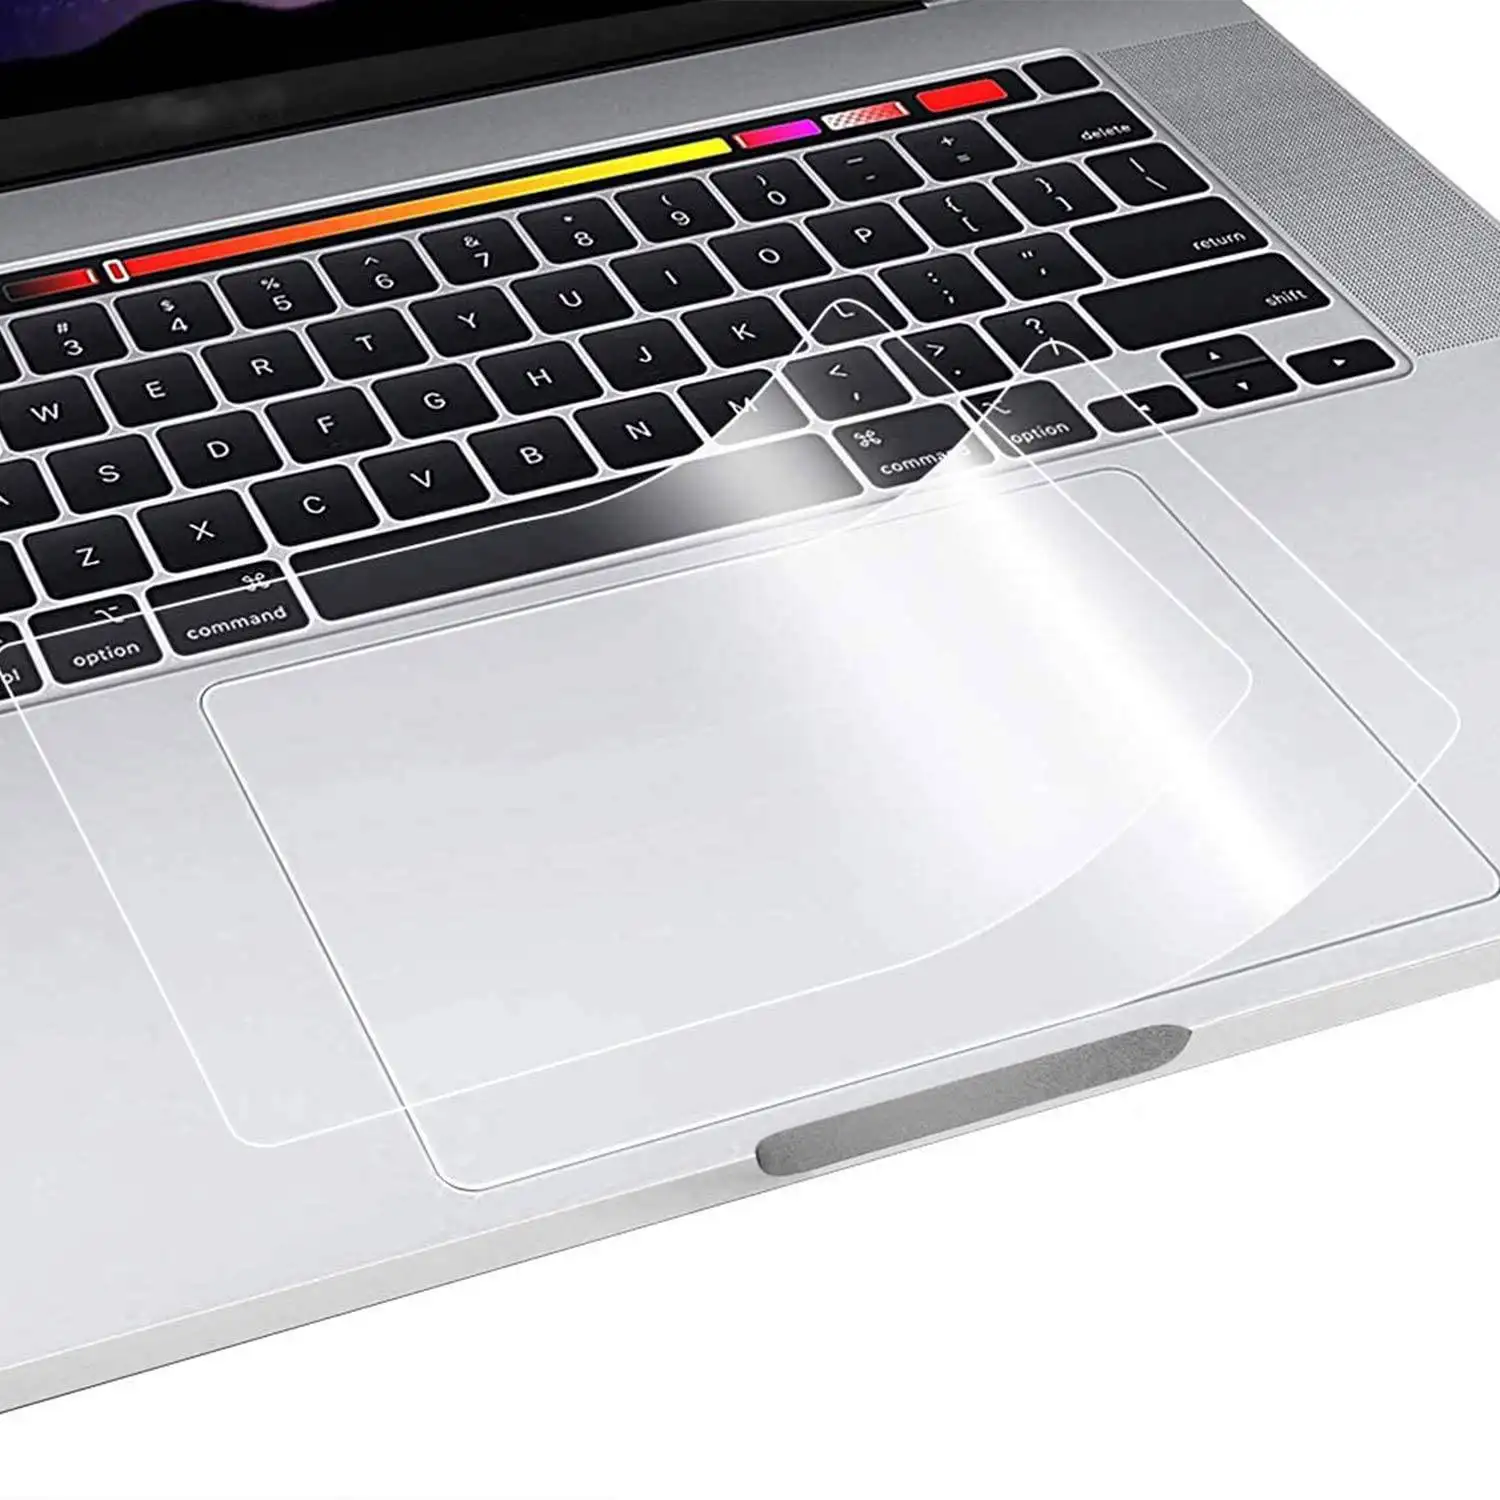 LFD825 Neuer kratz fester, blend freier AG Touchpad Protector Track pad Schutz aufkleber für MacBook Touchpad Cover Skin PET Film